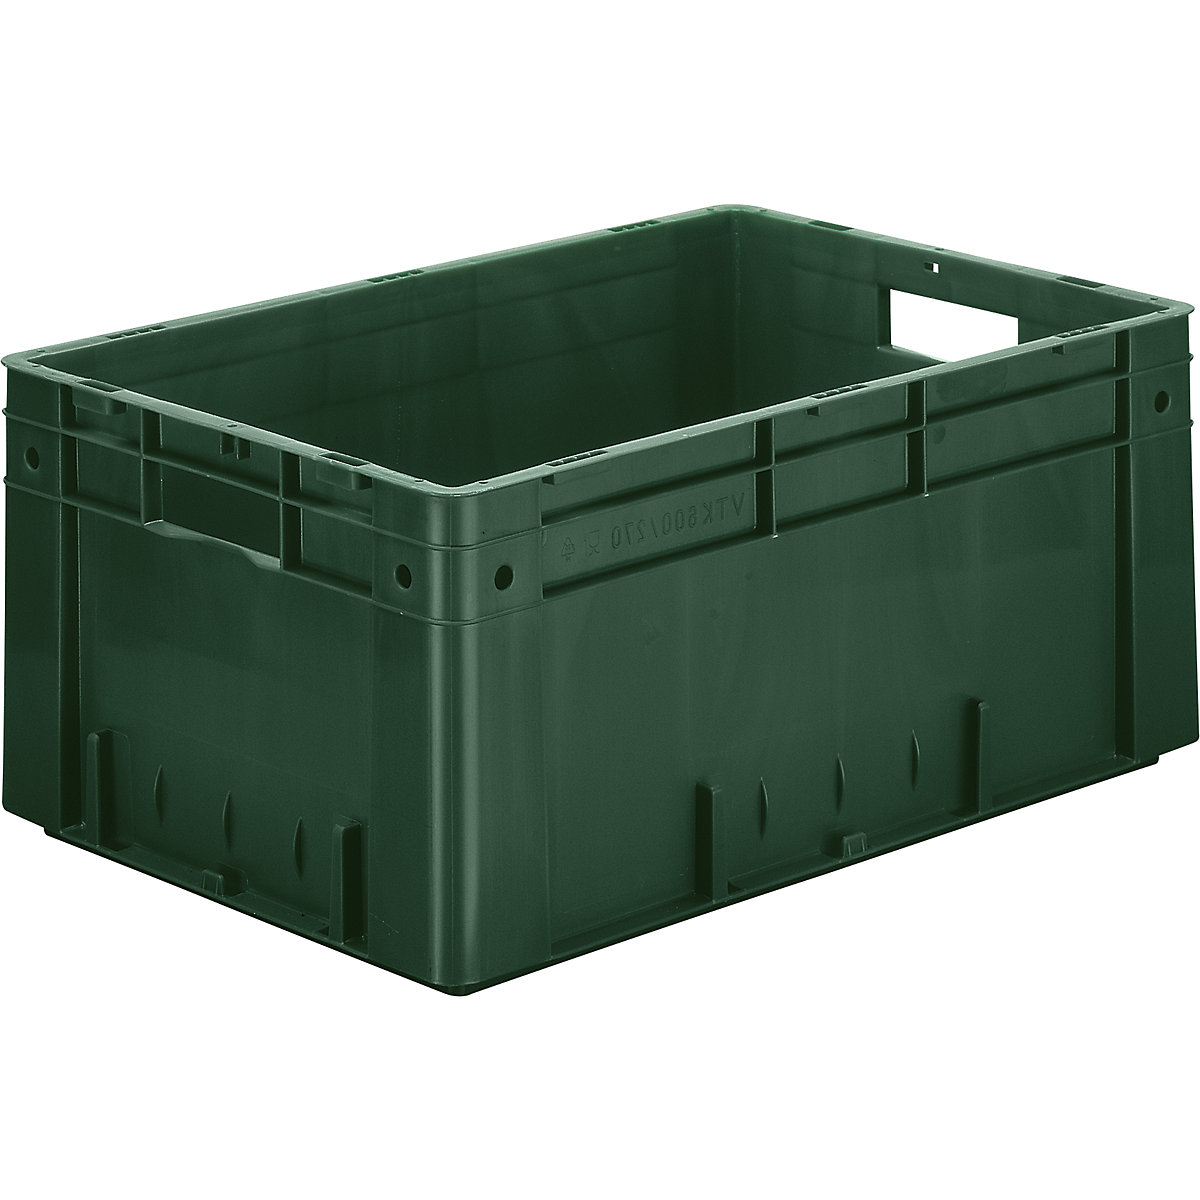 Euro-recipiente para cargas pesadas, polipropileno, capacidad 50 l, L x A x H 600 x 400 x 270 mm, paredes cerradas, fondo cerrado, verde, UE 2 unidades-5